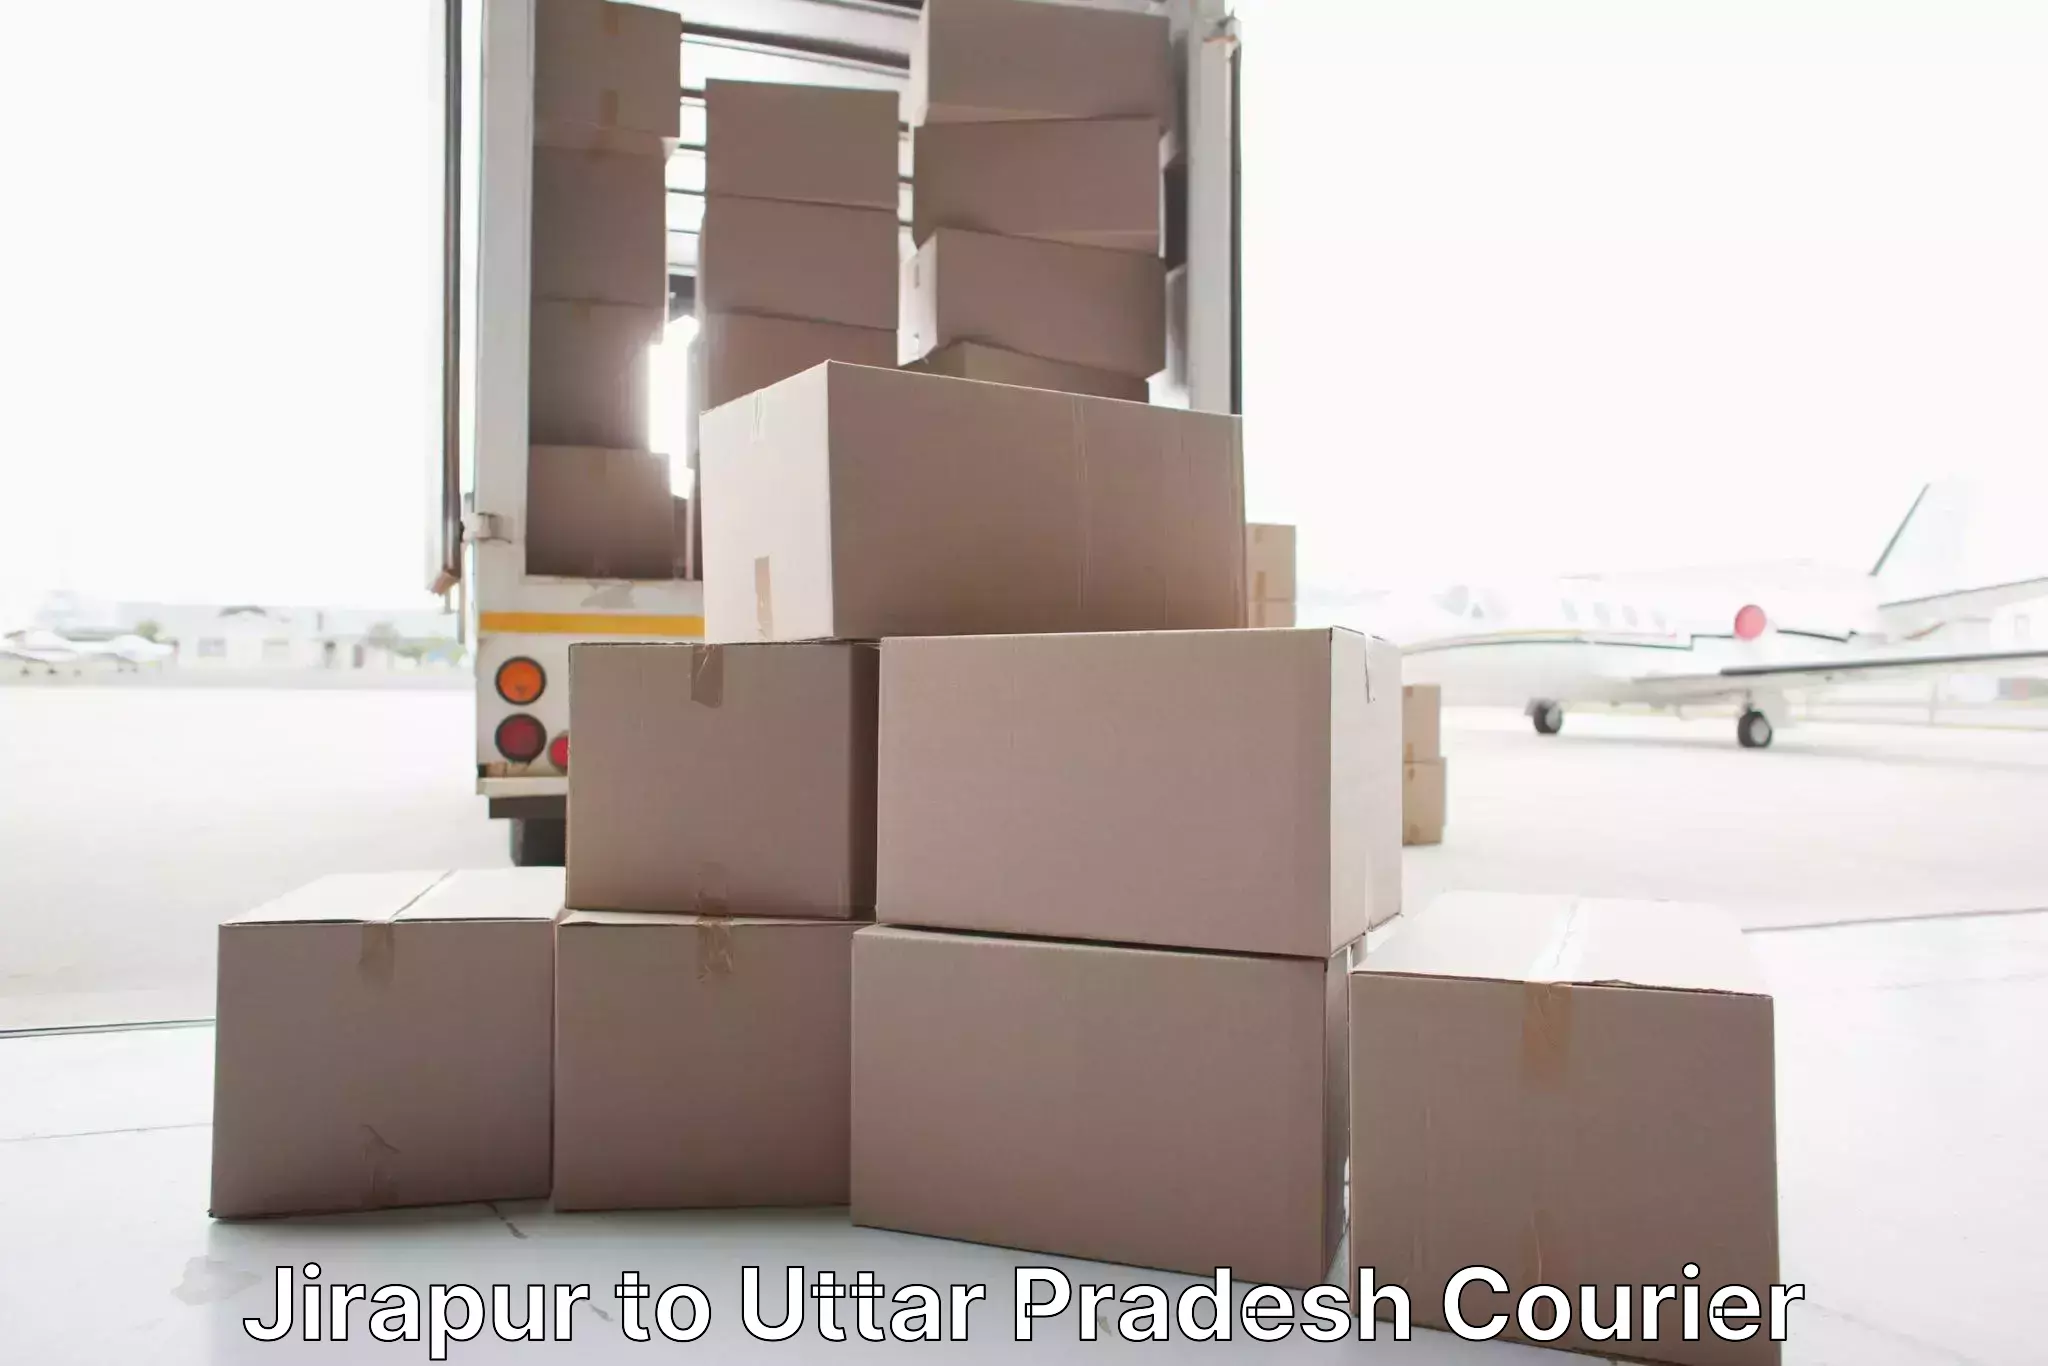 Reliable movers Jirapur to Varanasi